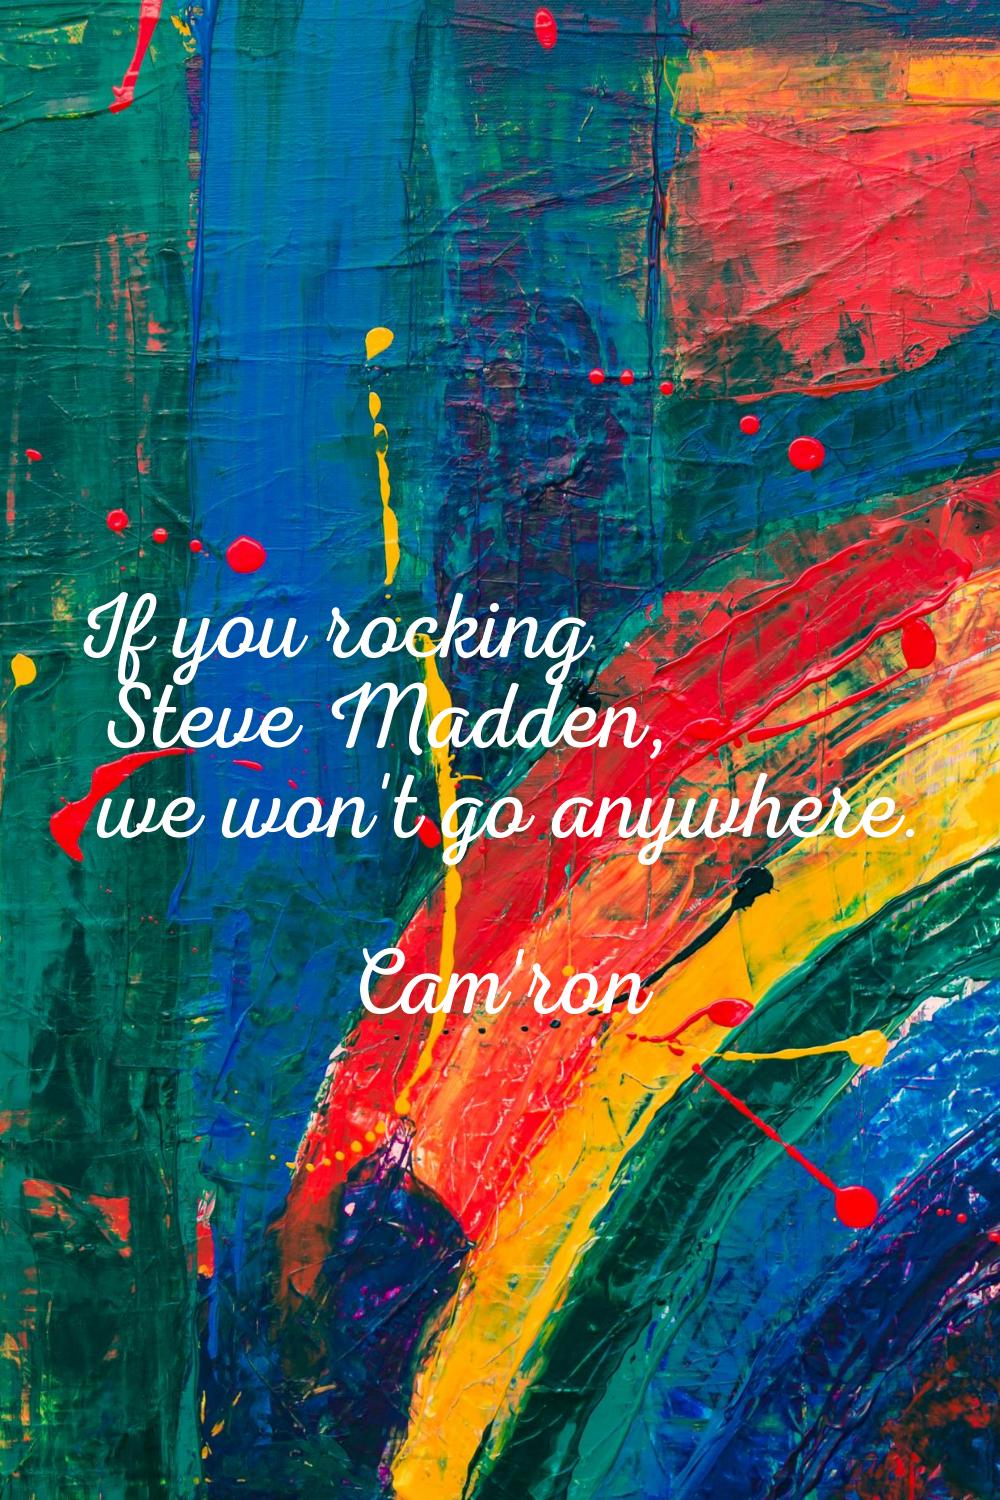 If you rocking Steve Madden, we won't go anywhere.